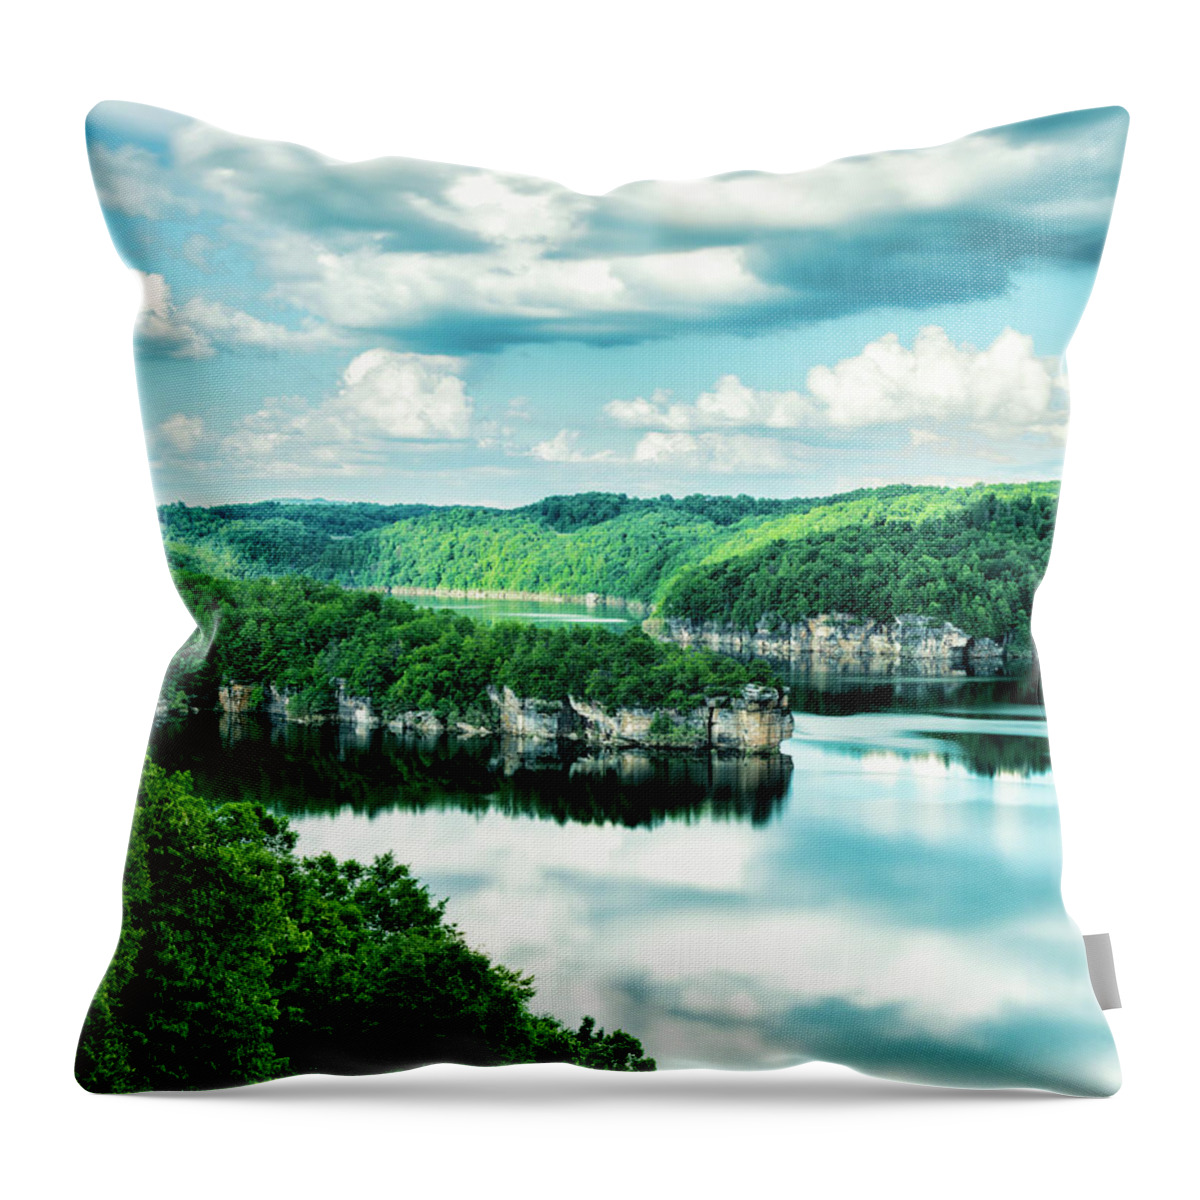 Summersville Throw Pillow featuring the photograph Summertime At Long Point by Mark Allen